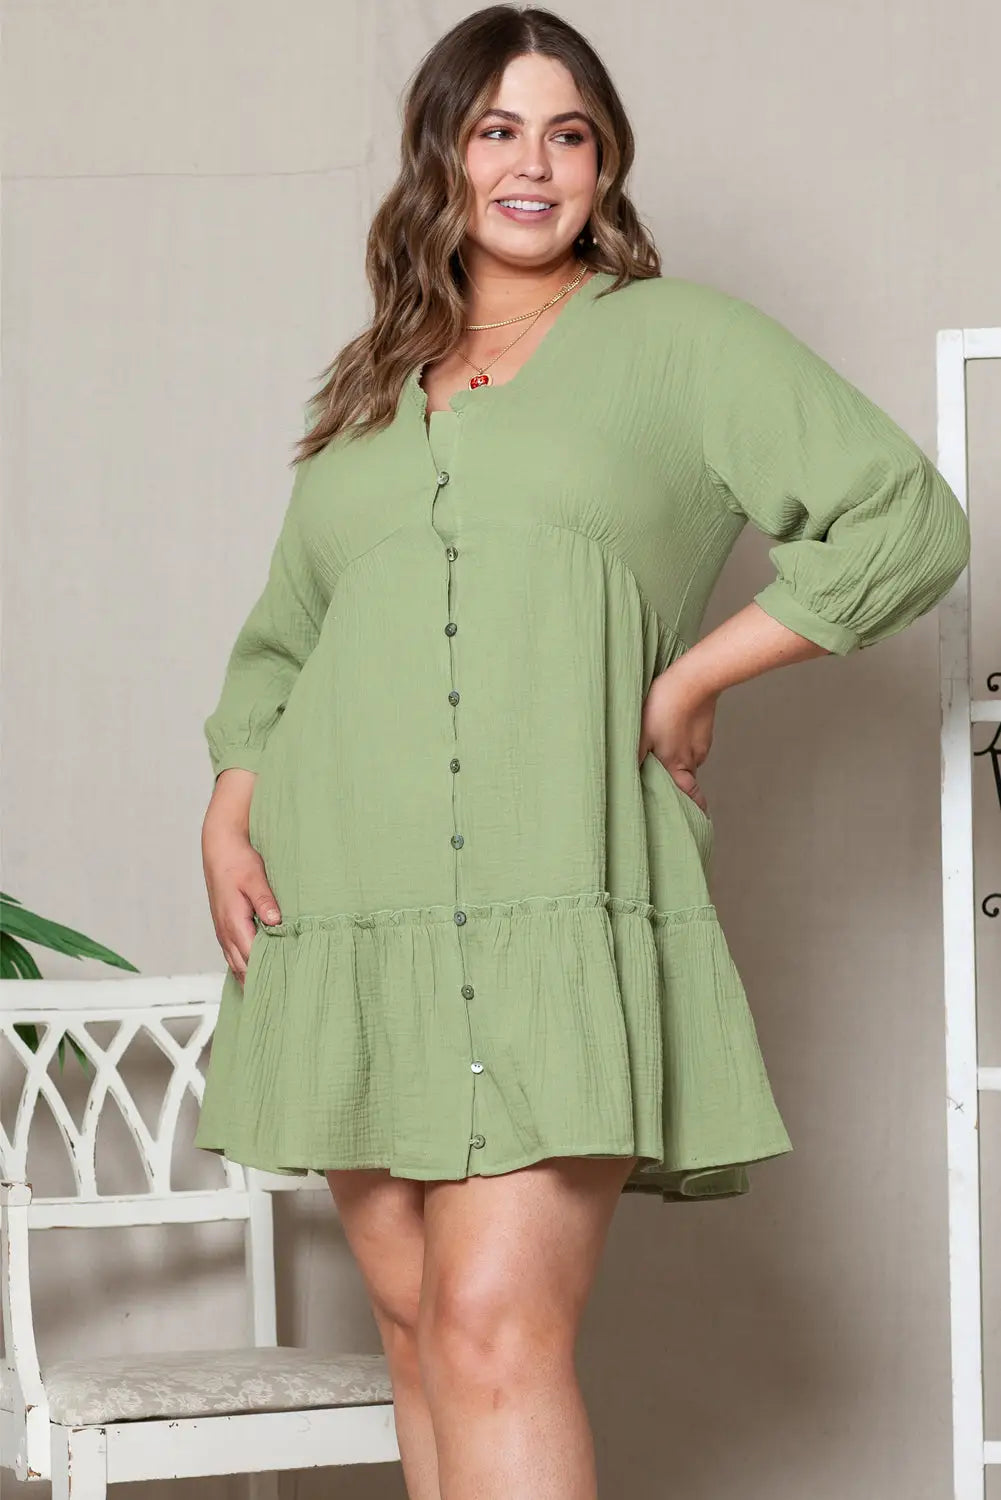 Green textured ruffled buttoned v neck plus size mini dress - 1x / 100% cotton